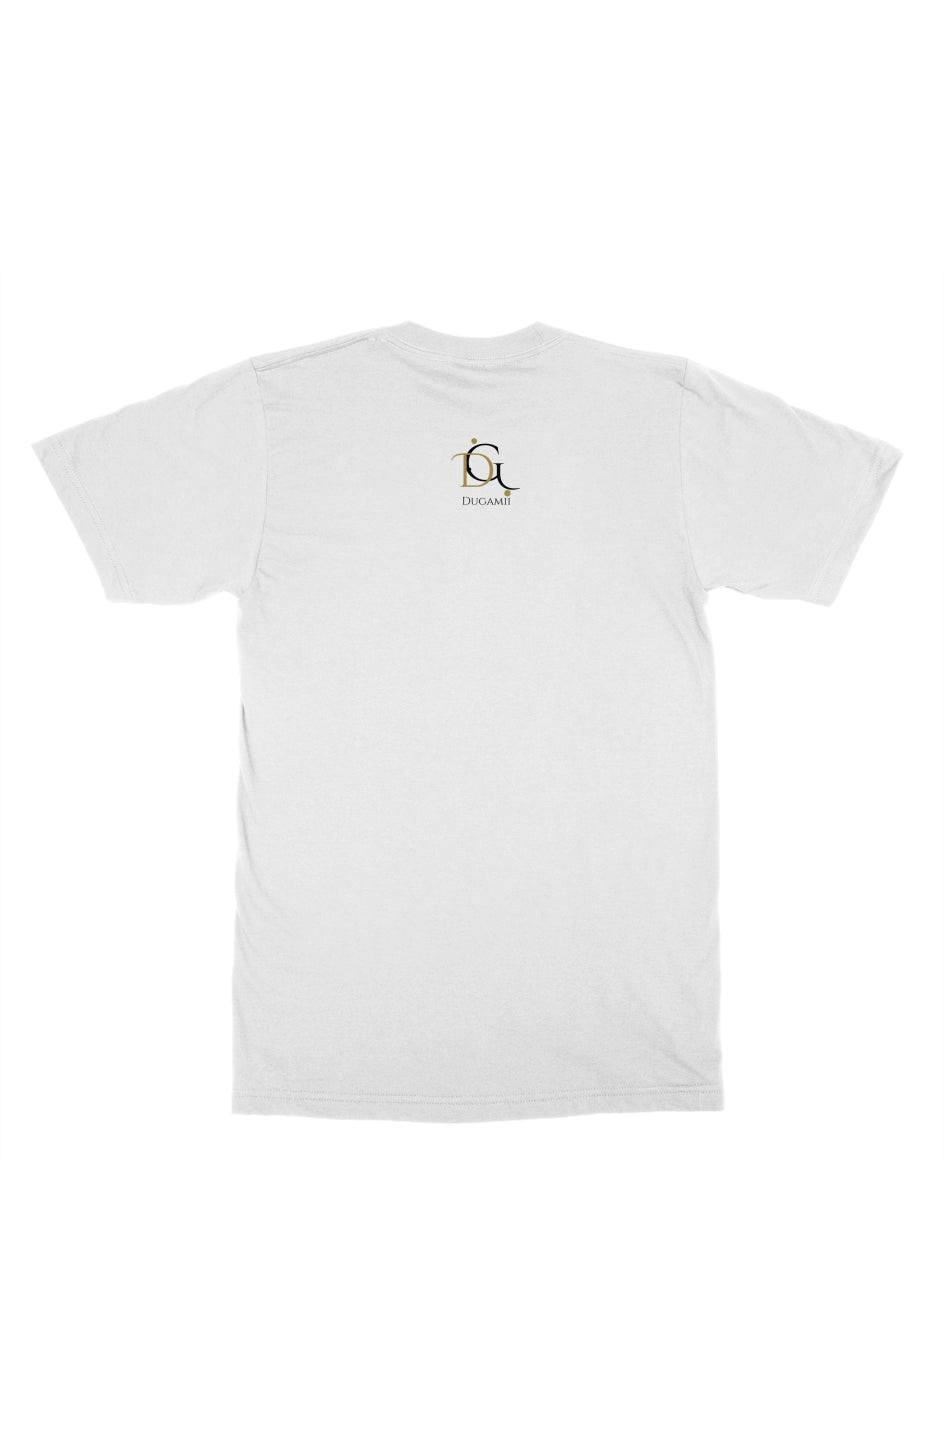 Men's DuGamii Lock and Key White T-Shirt